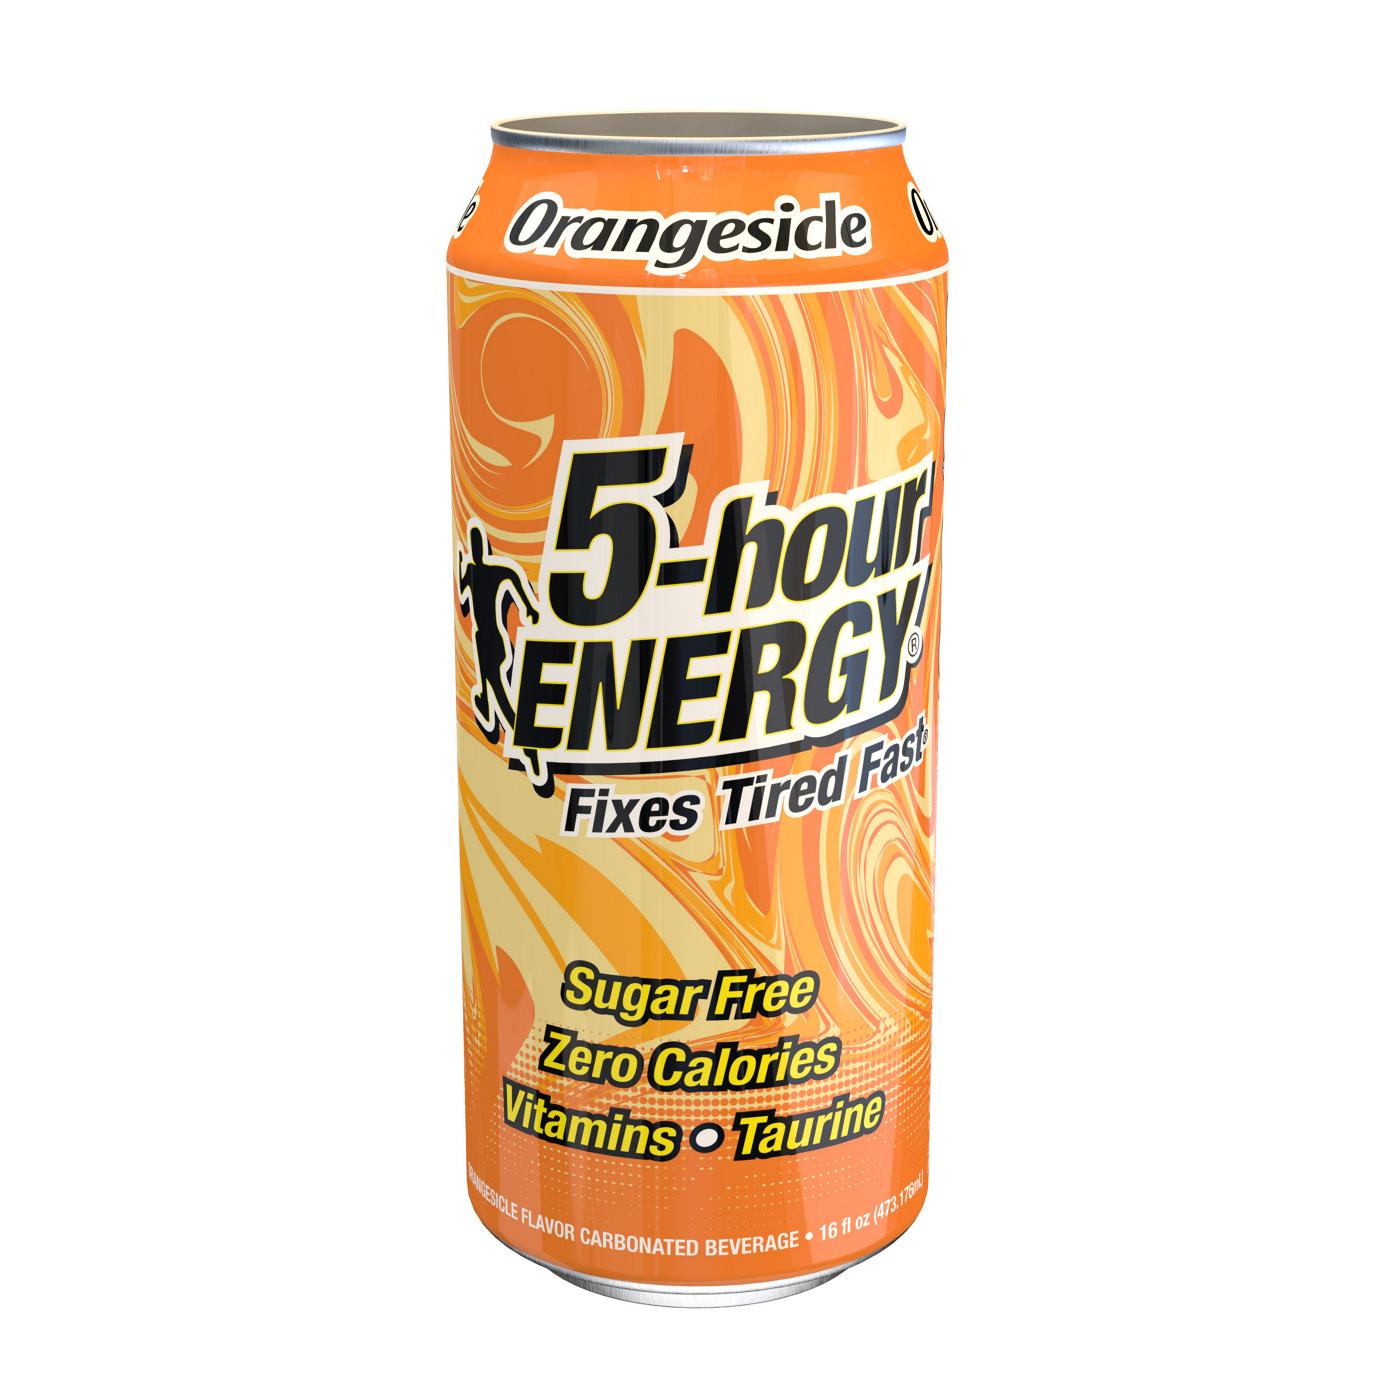 5-hour ENERGY Extra Strength Energy Drink - Orangesicle; image 1 of 3